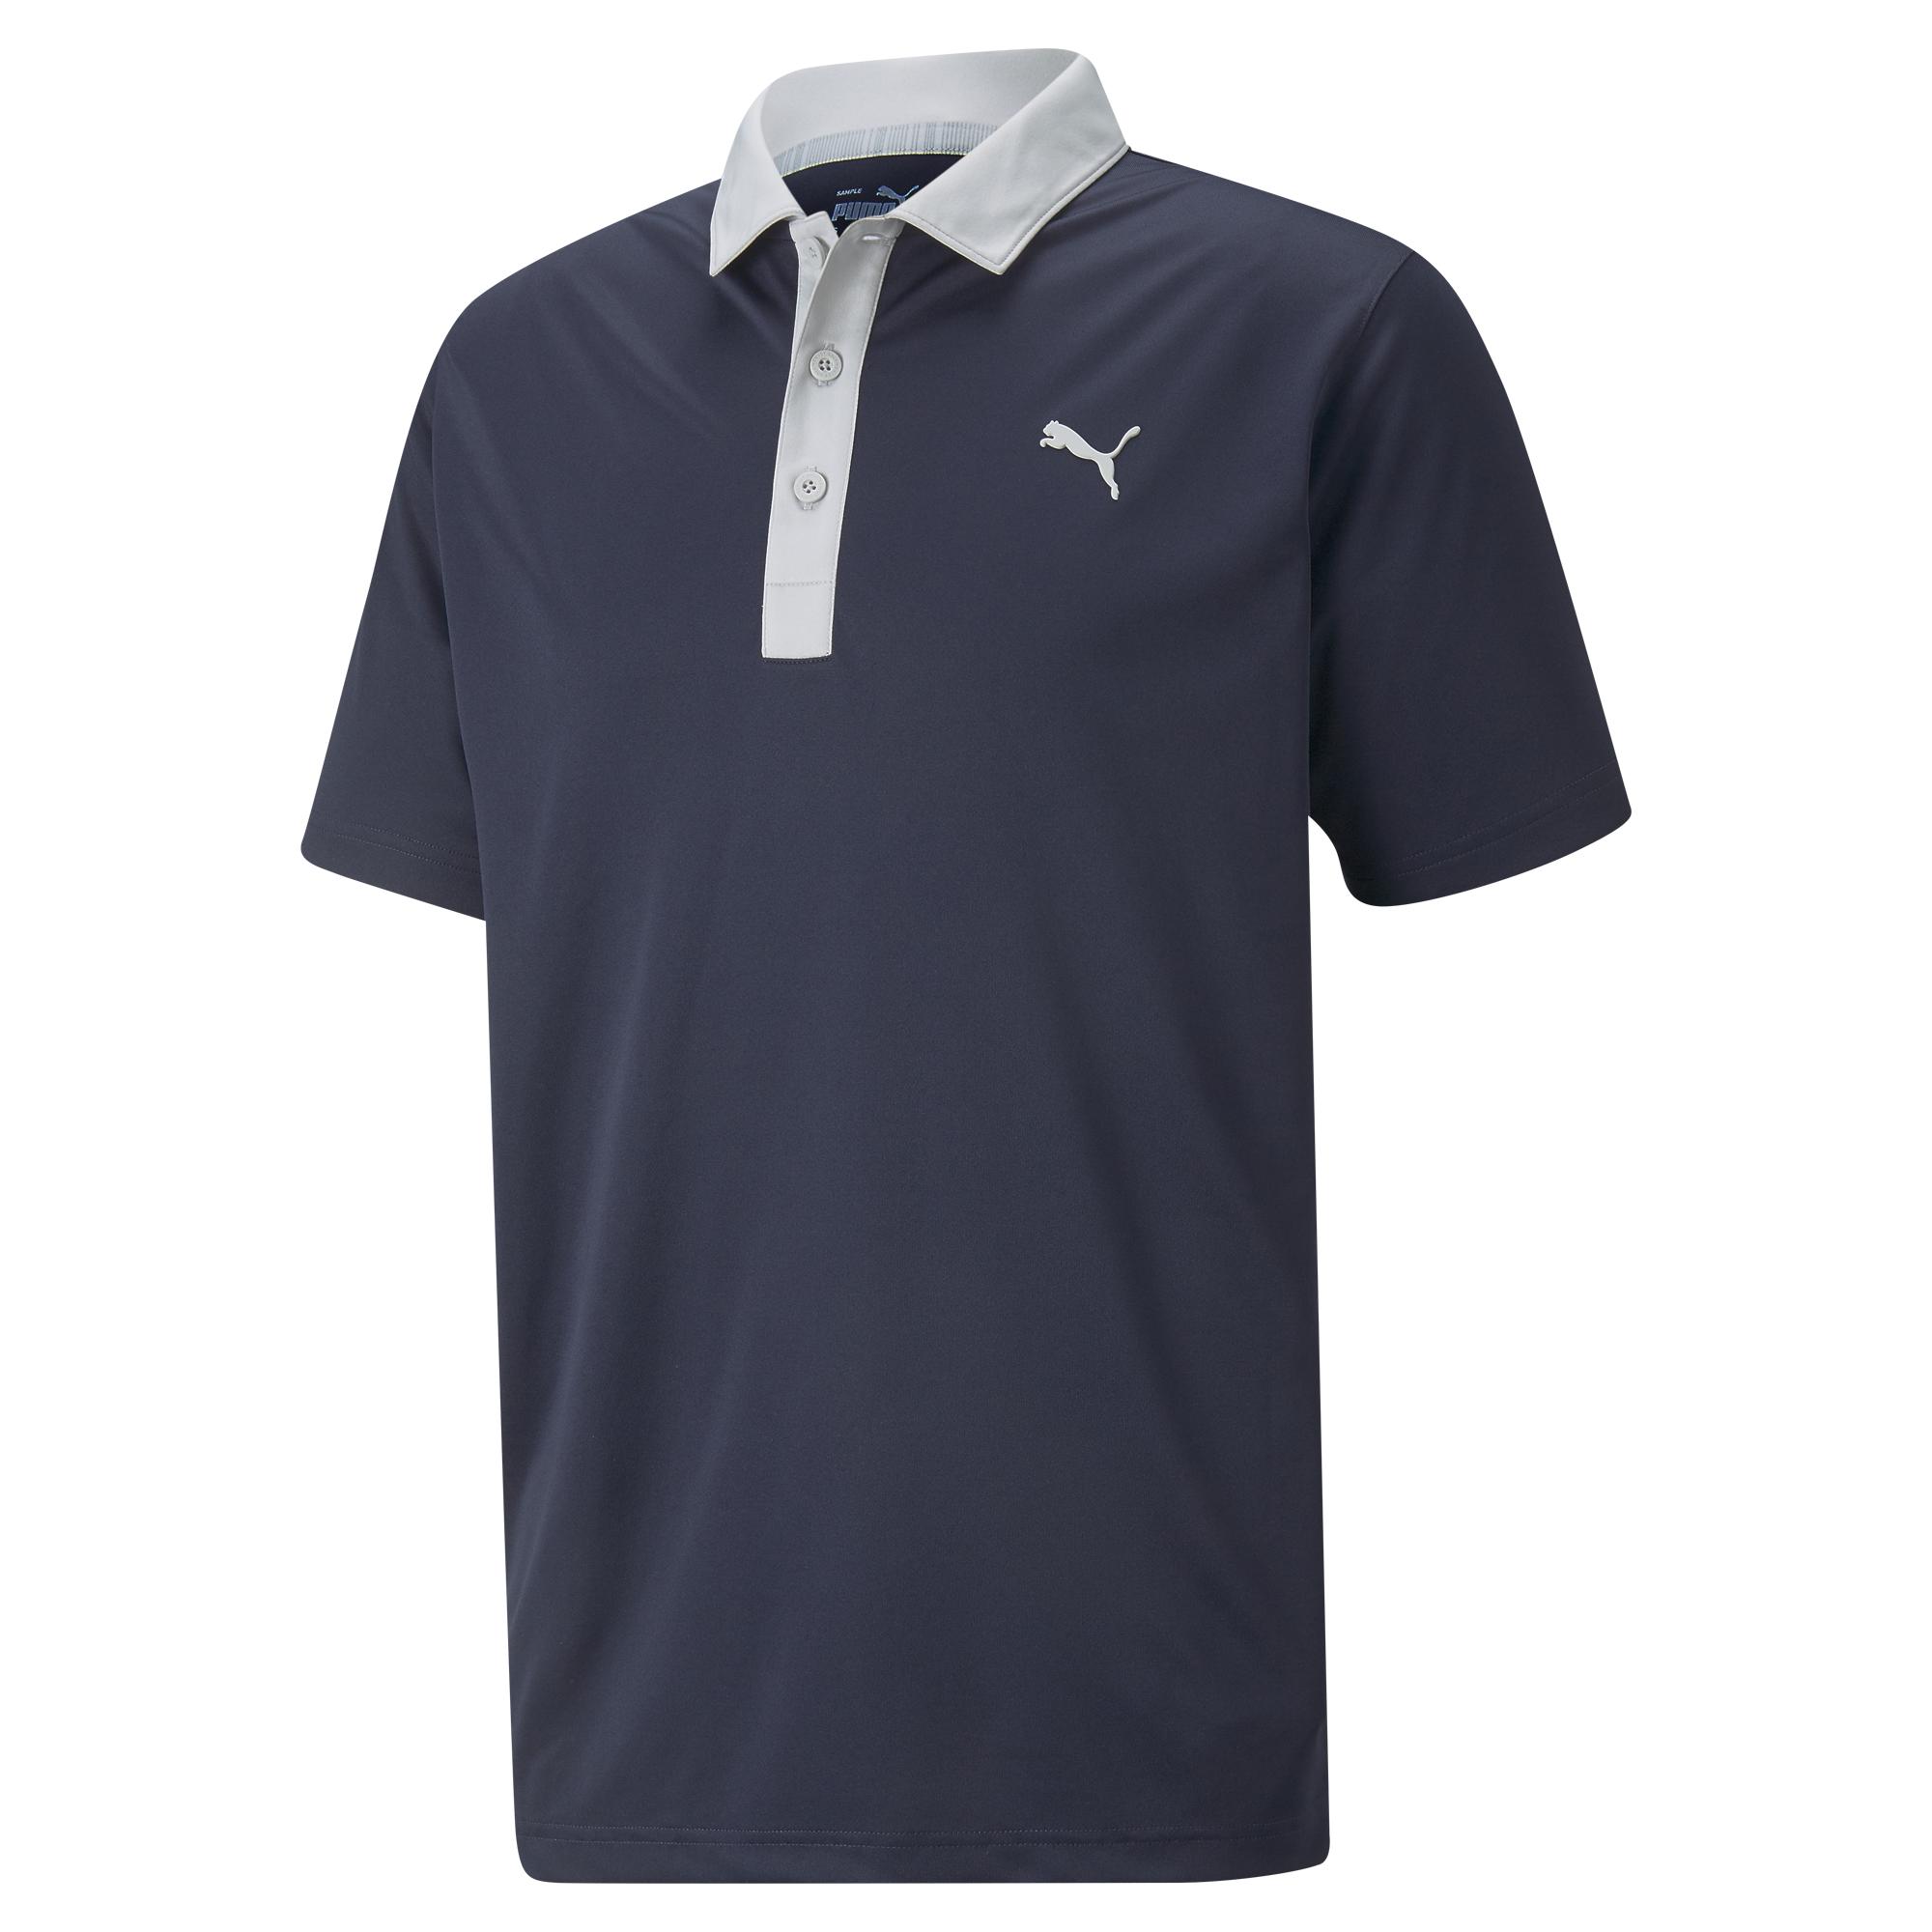 Herren Herren Polos Shirts | Gamer Golfbekleidung Puma / Polo